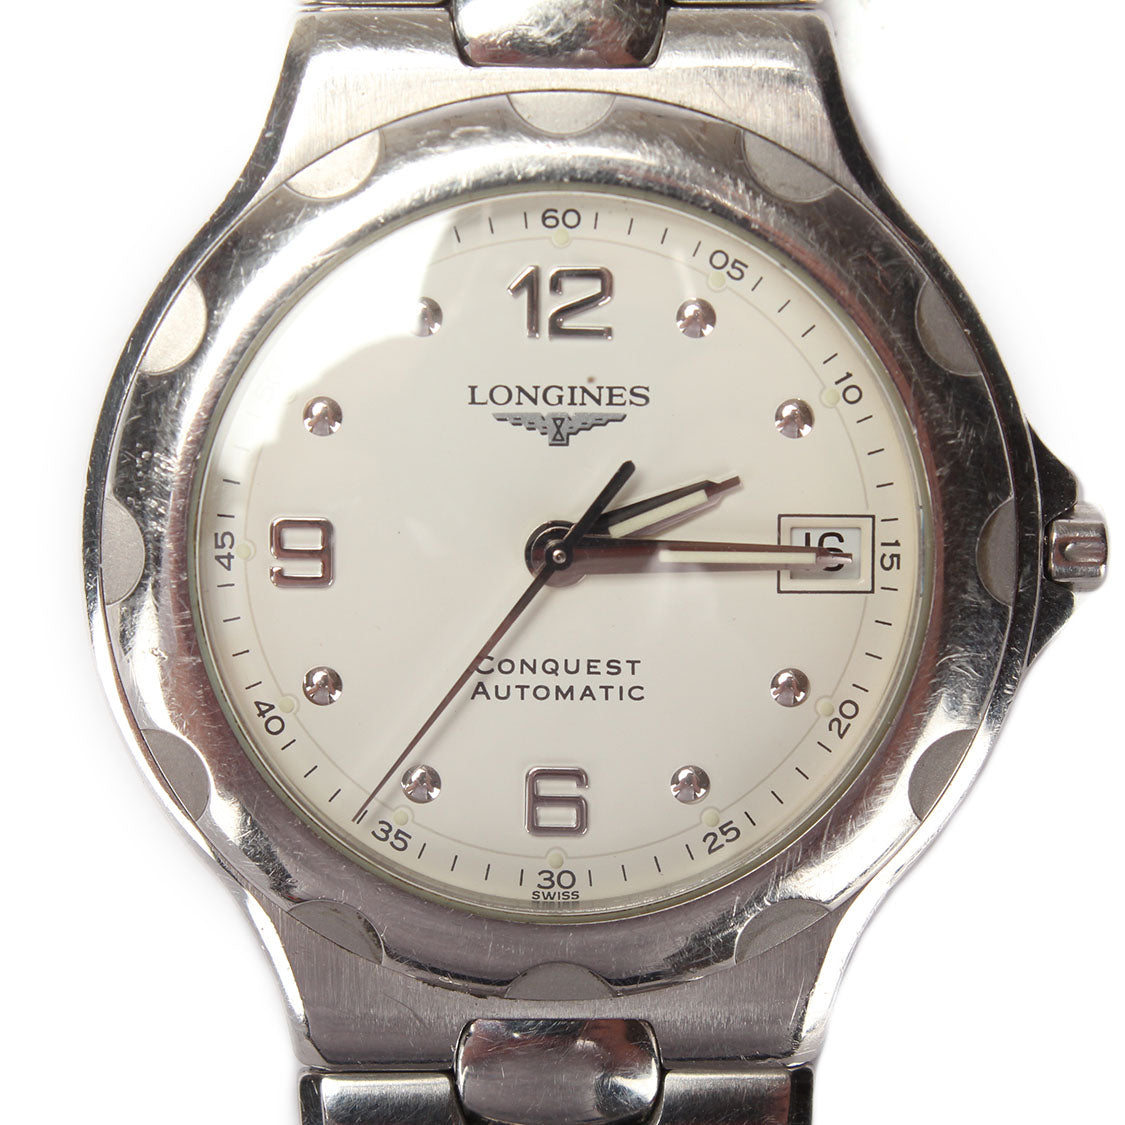 Automatic Conquest Wrist Watch